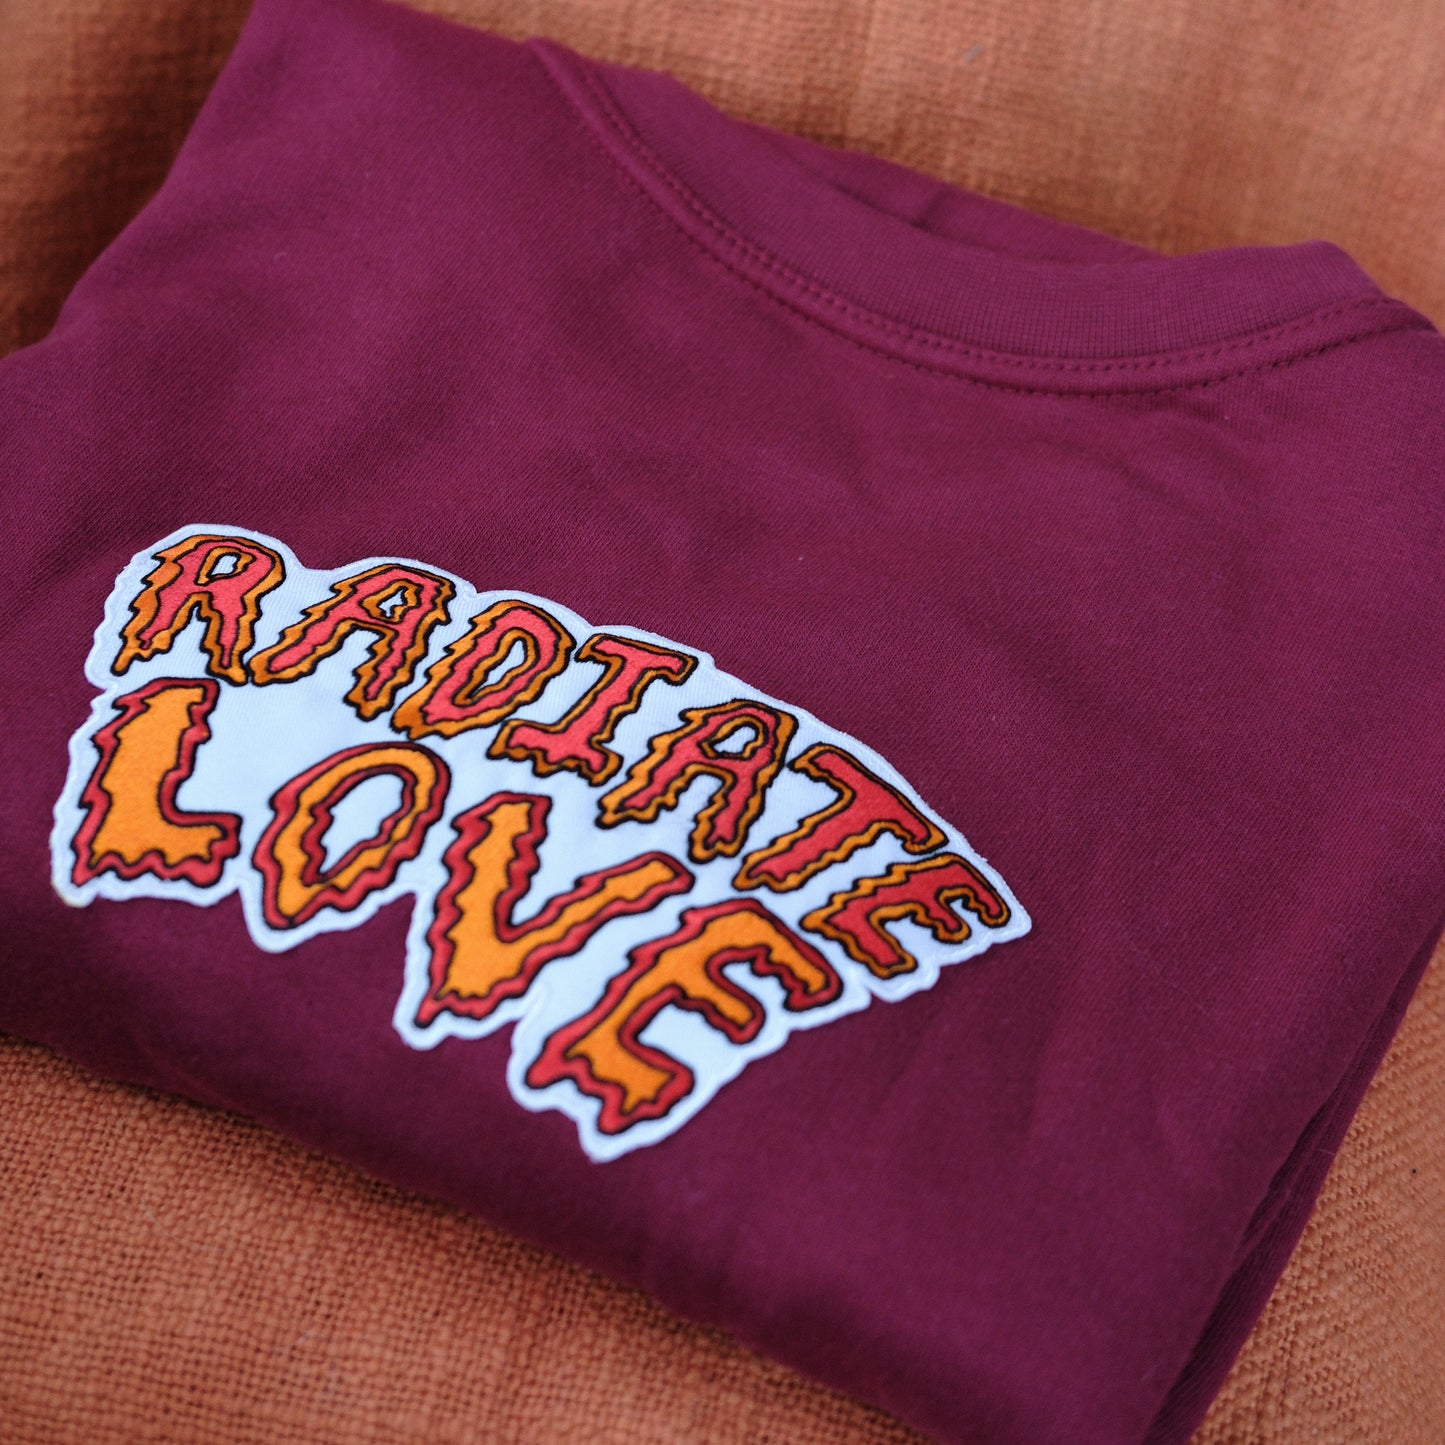 radiate love embroidered sweatshirt - burgundy